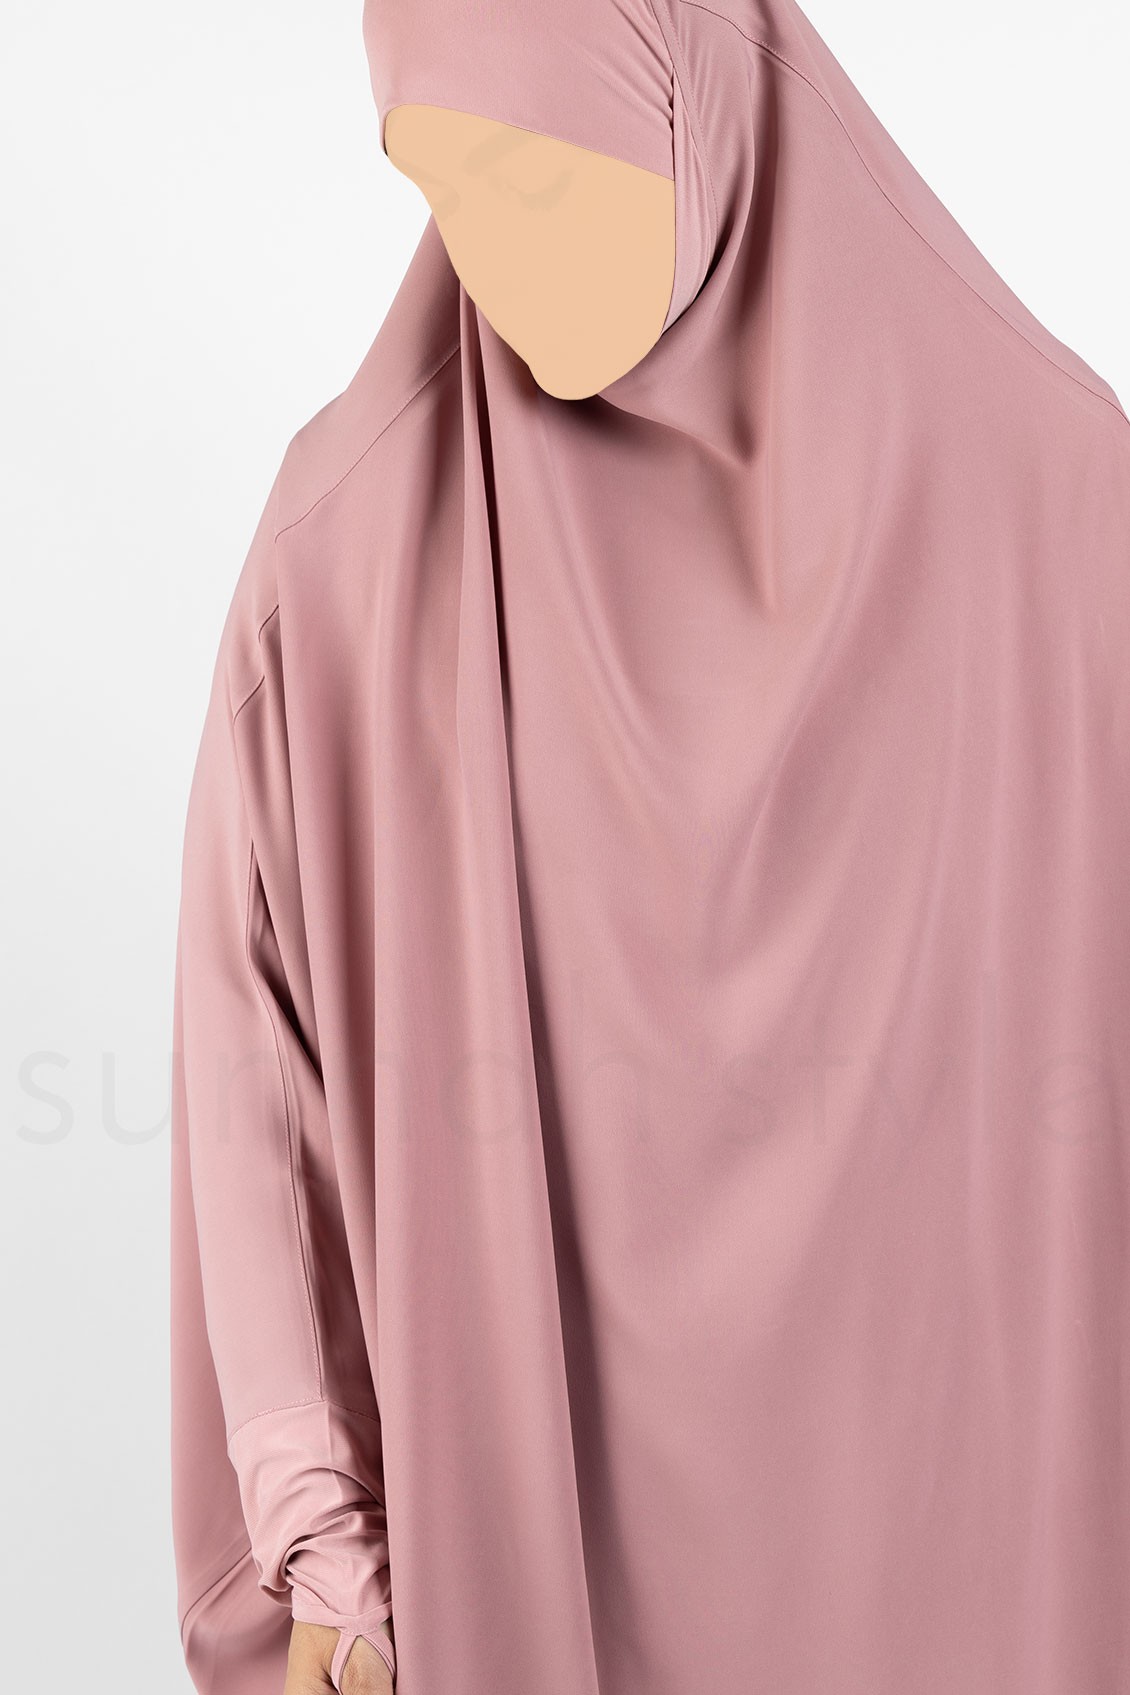 Sunnah Style Signature Jilbab Top Knee Length Dusty Rose